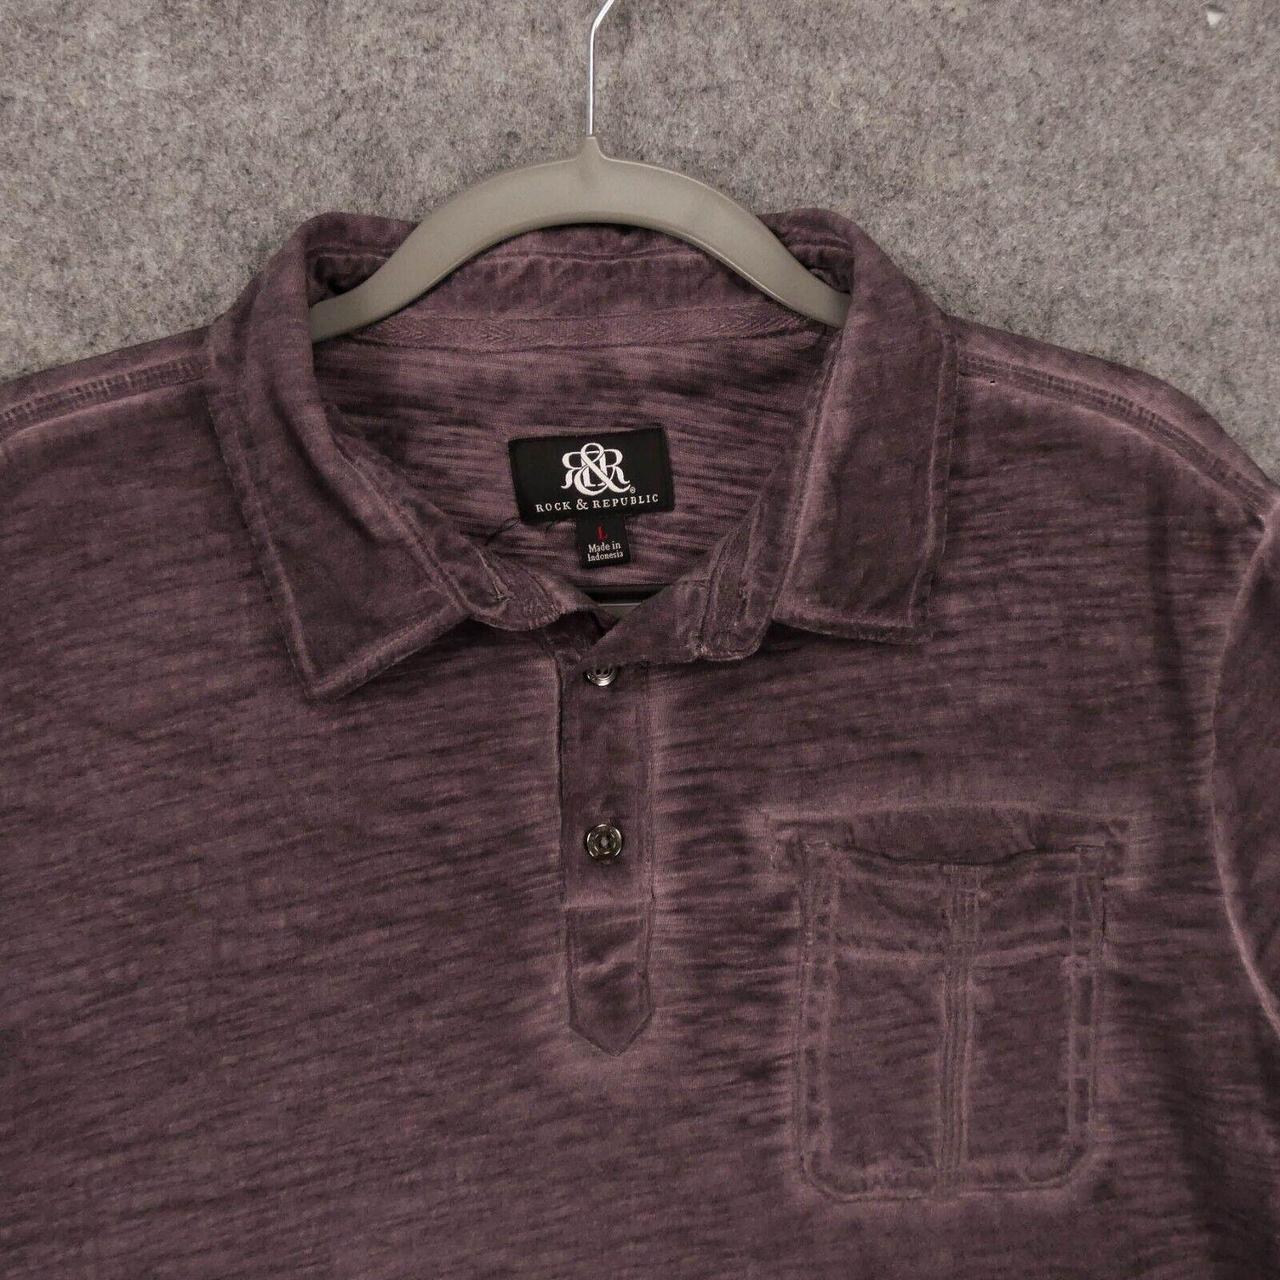 Rock and Republic Men's Purple Polo-shirts (2)